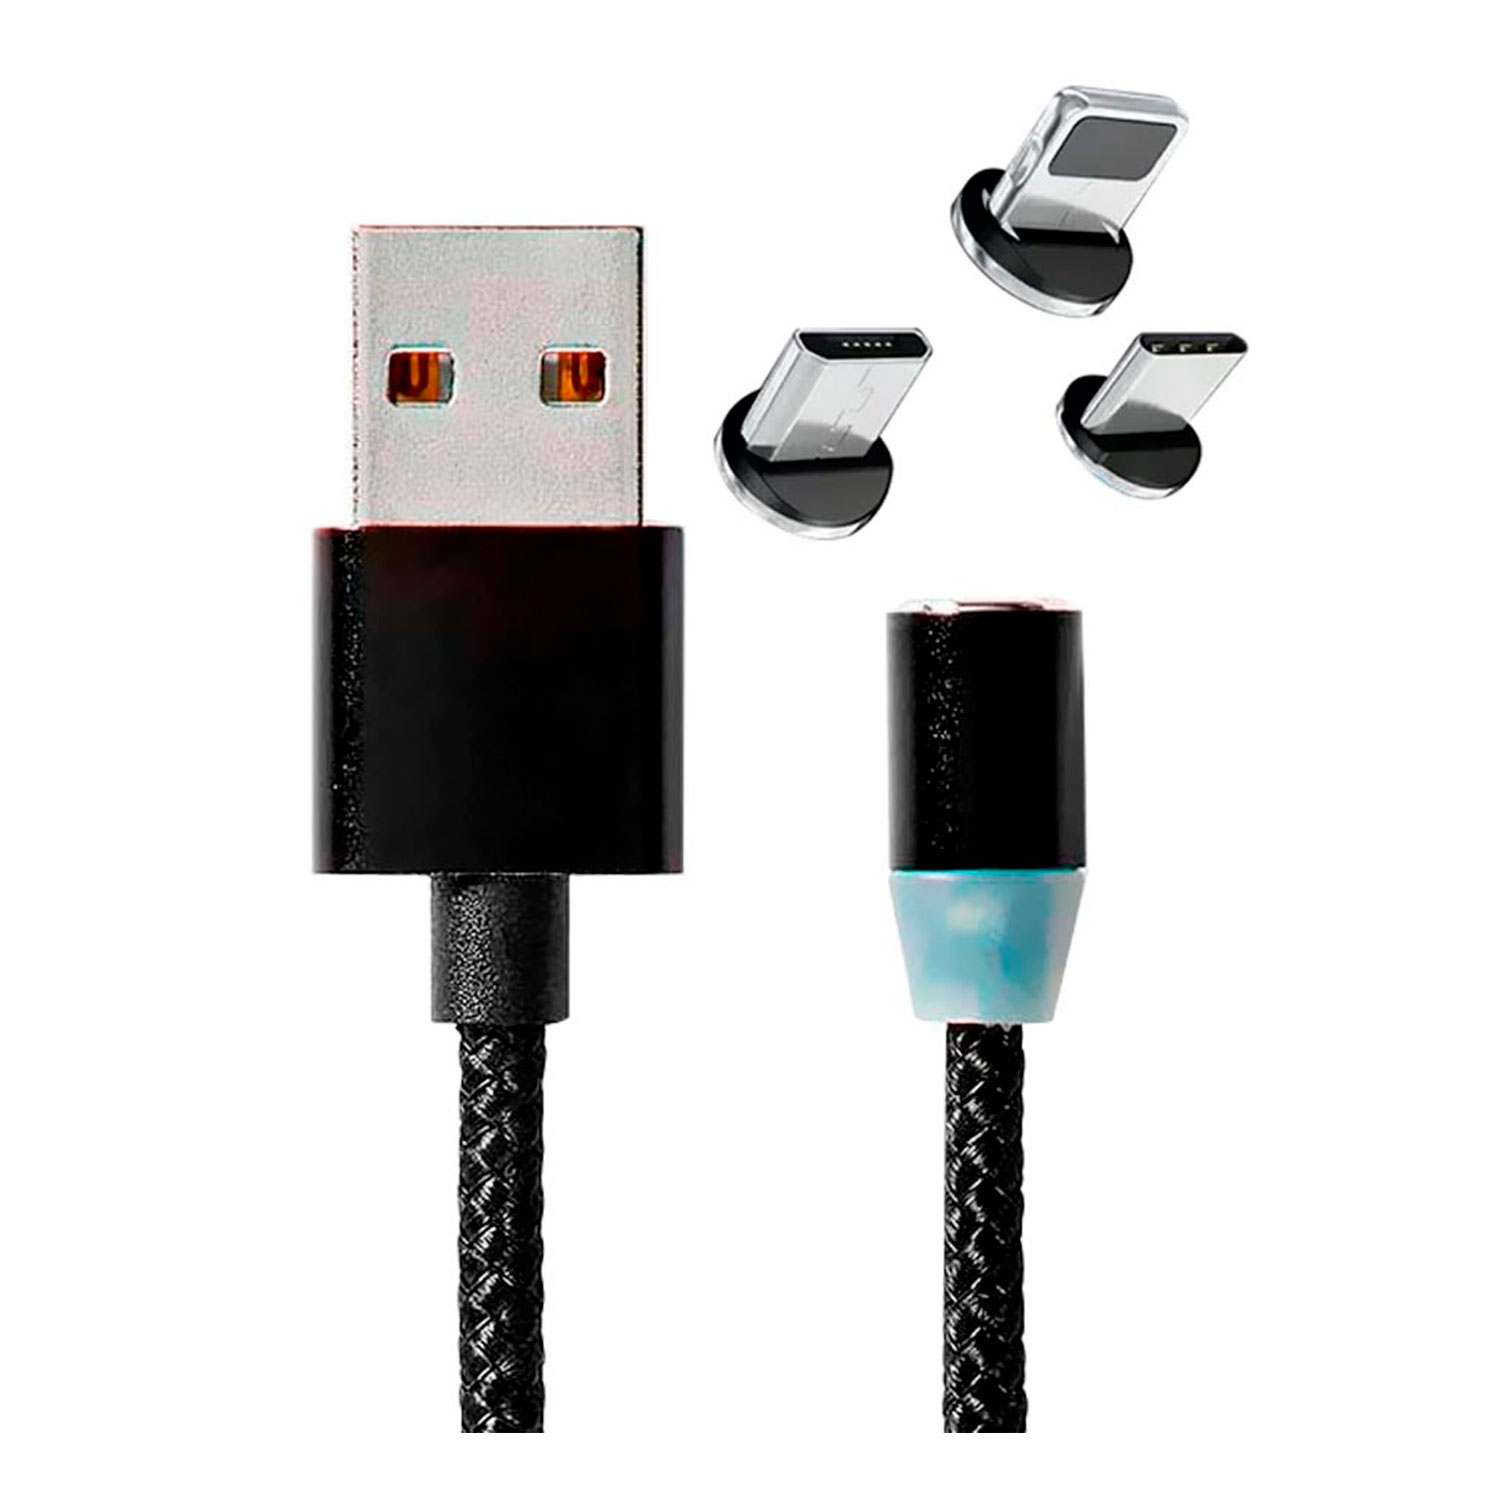 Cabo Magnético Smartzla USB 2.0 a Lightning Type-C Micro USB SAT-C005 1M - Preto
